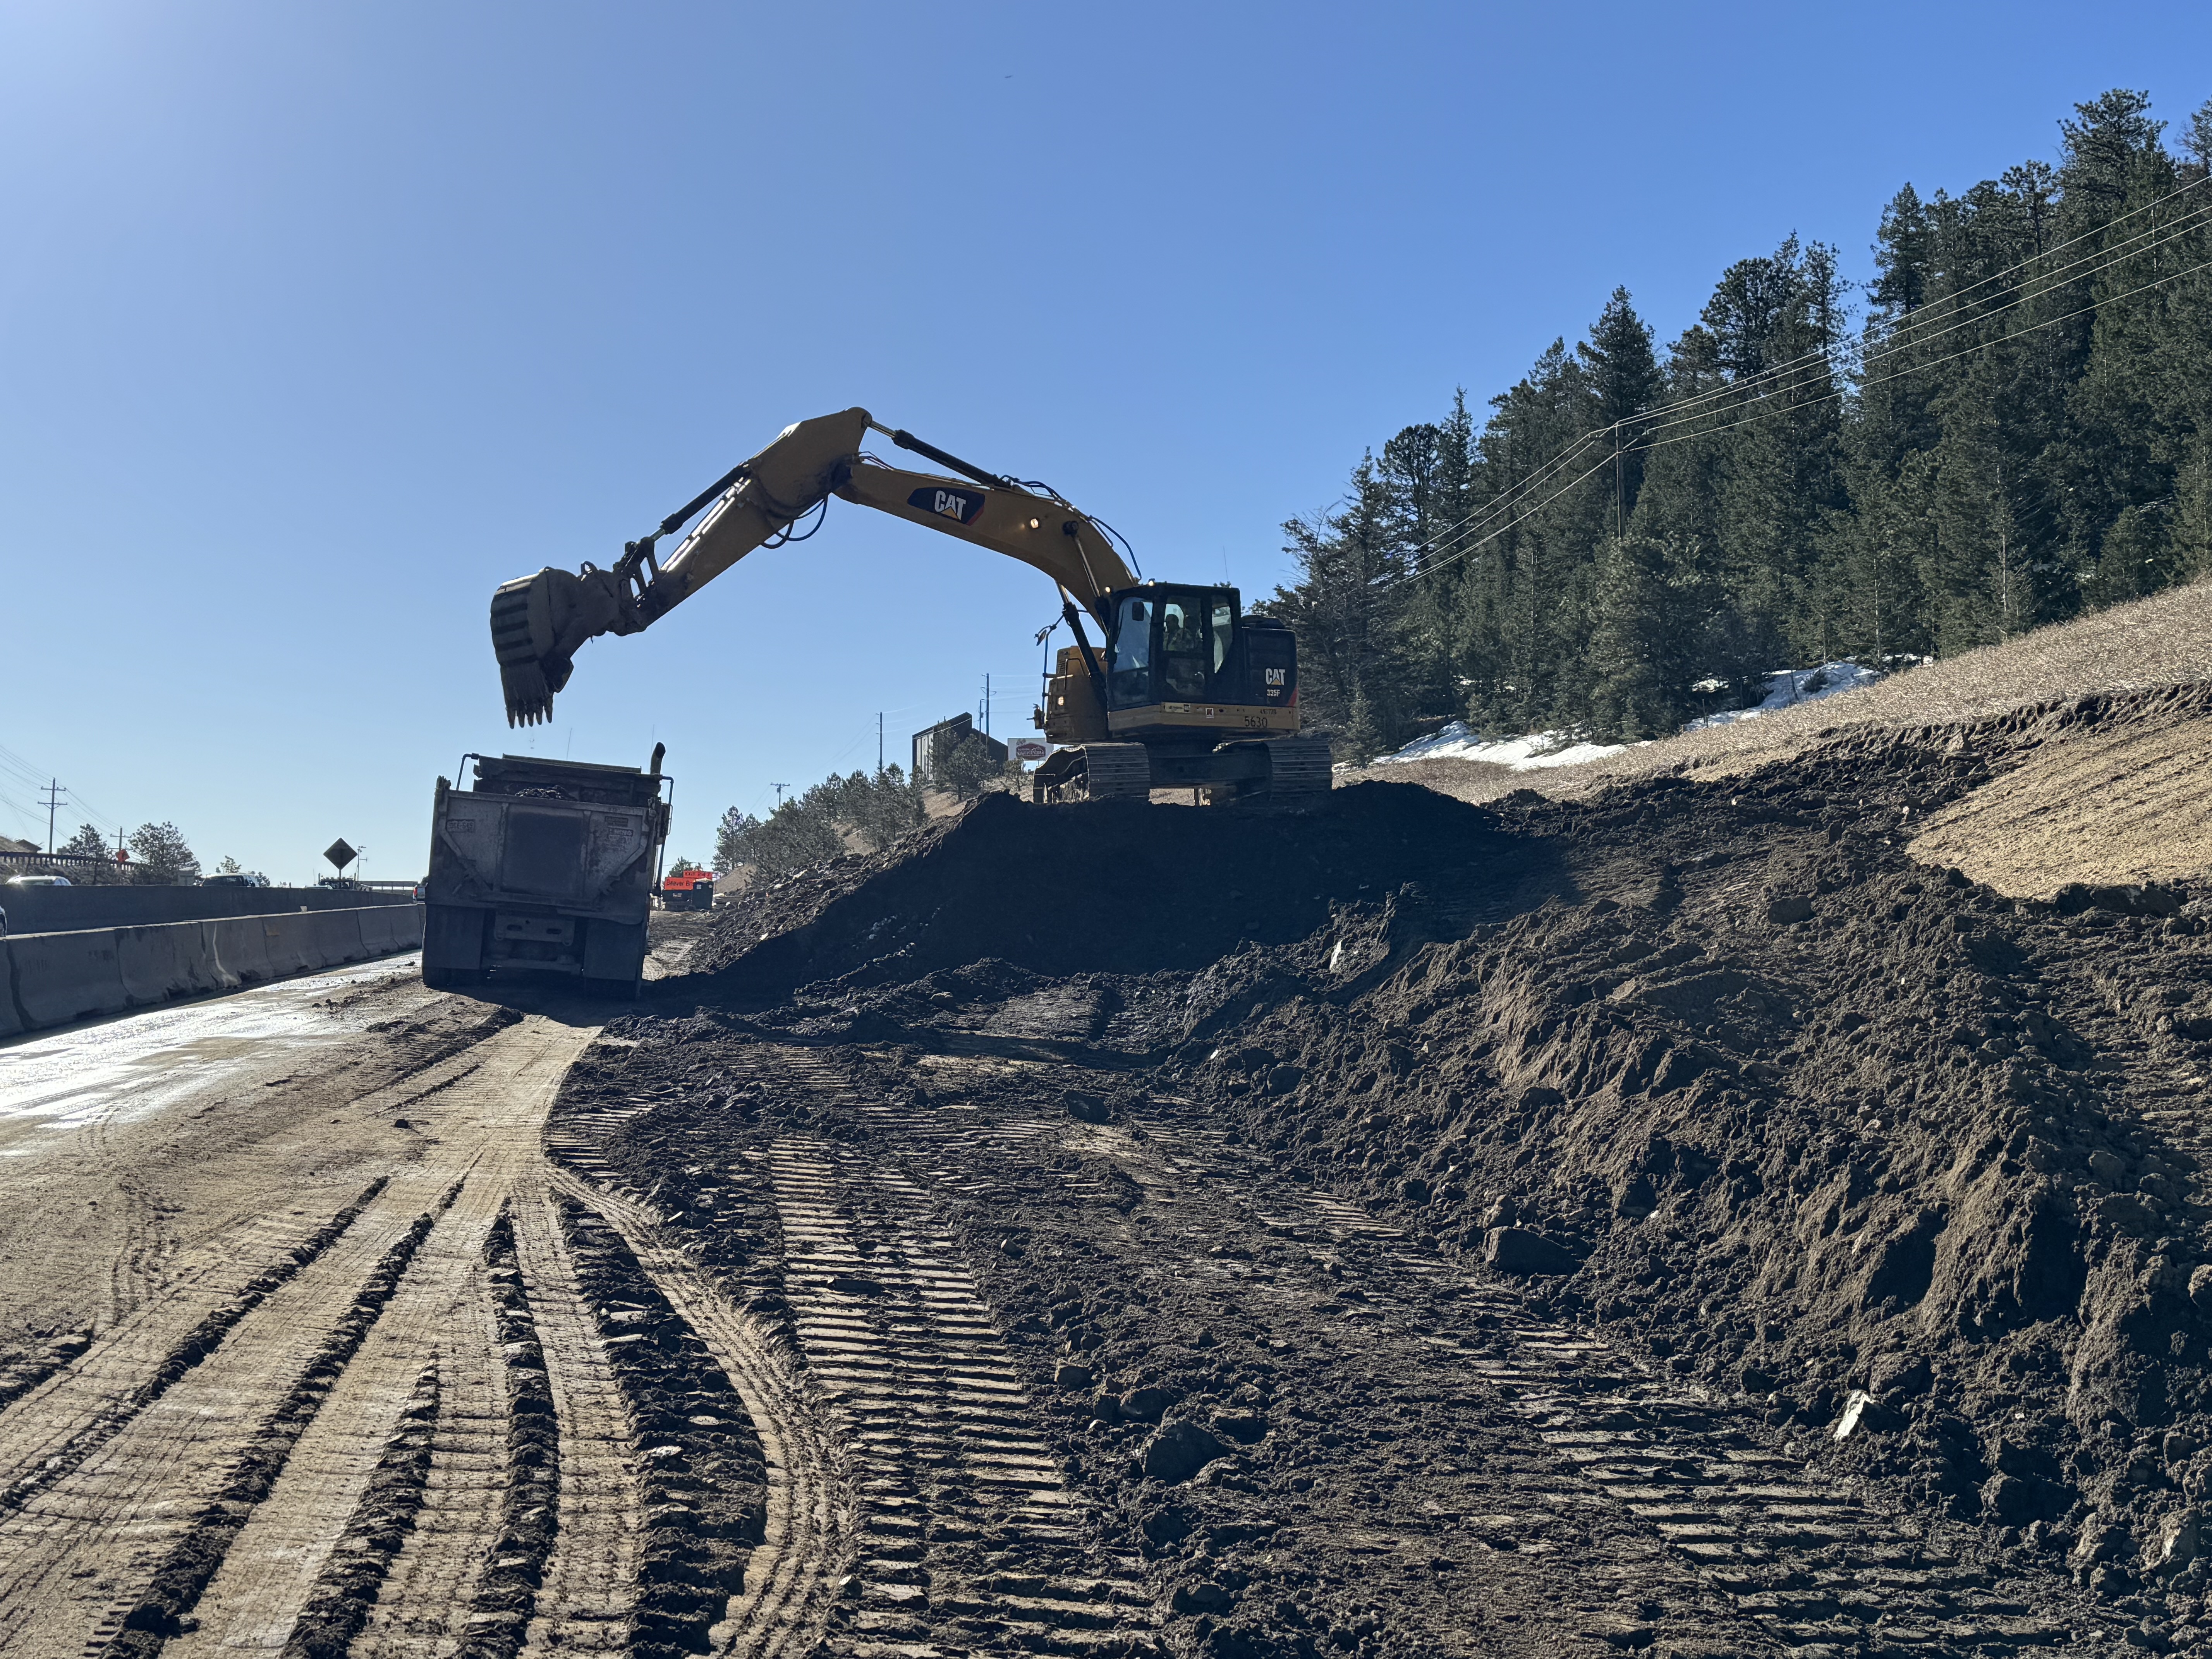 240411_Excavator loading dirt into truck_I-70 Floyd Hill.JPG detail image